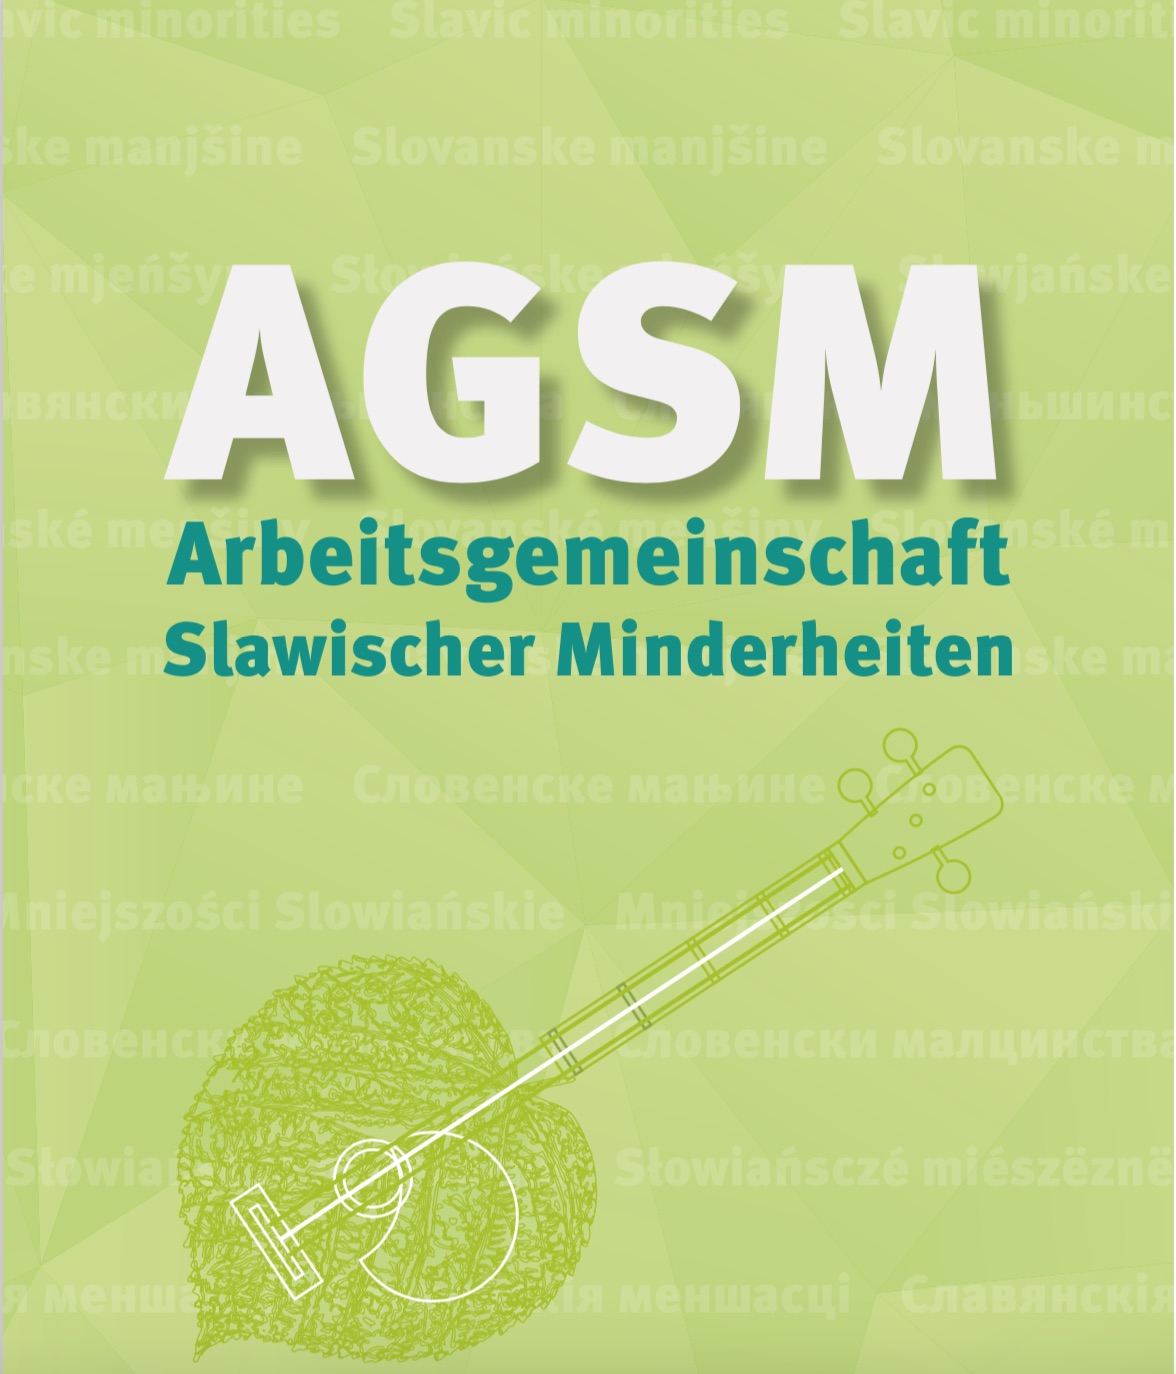 AGSM Broschüre